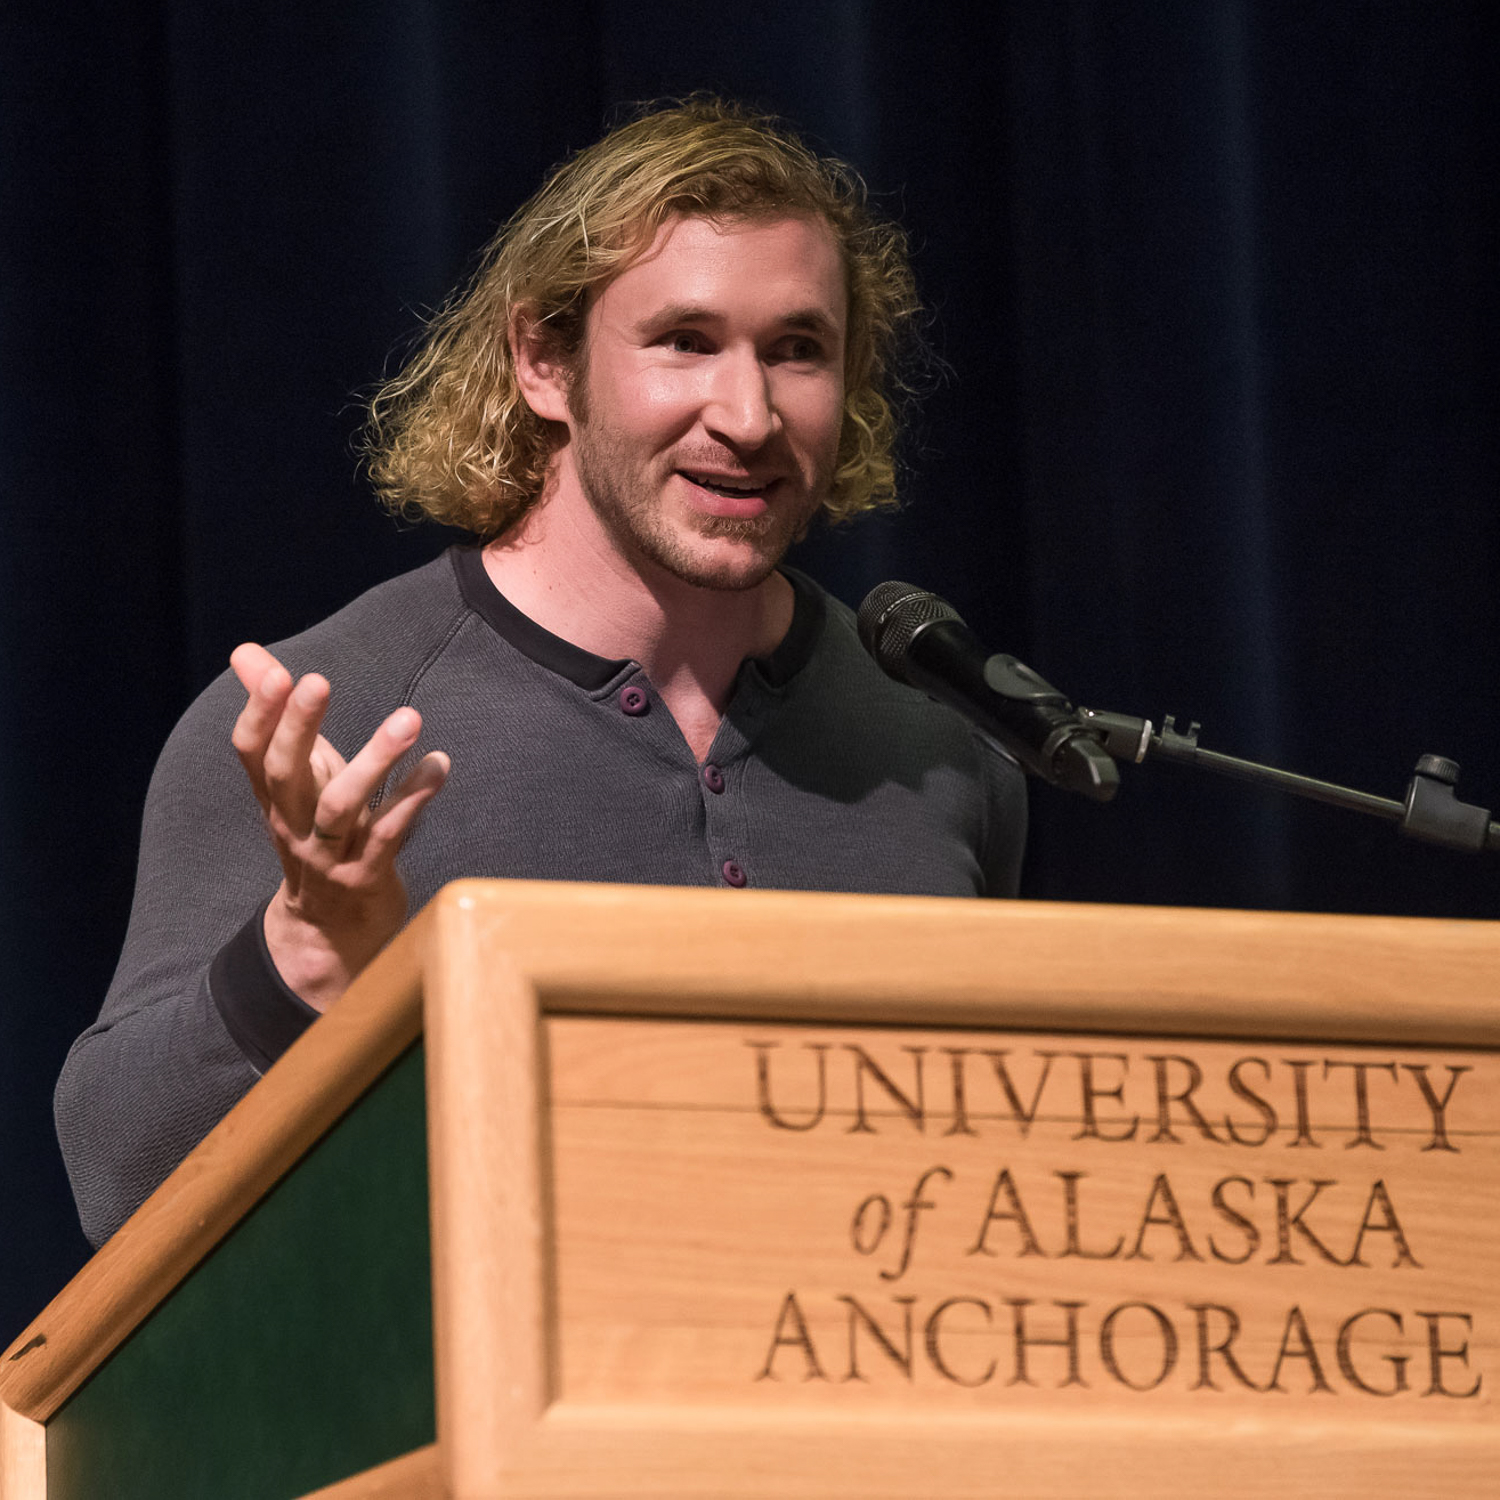 Nick Armstrong stand at a University of Alaska Anchorage podium.